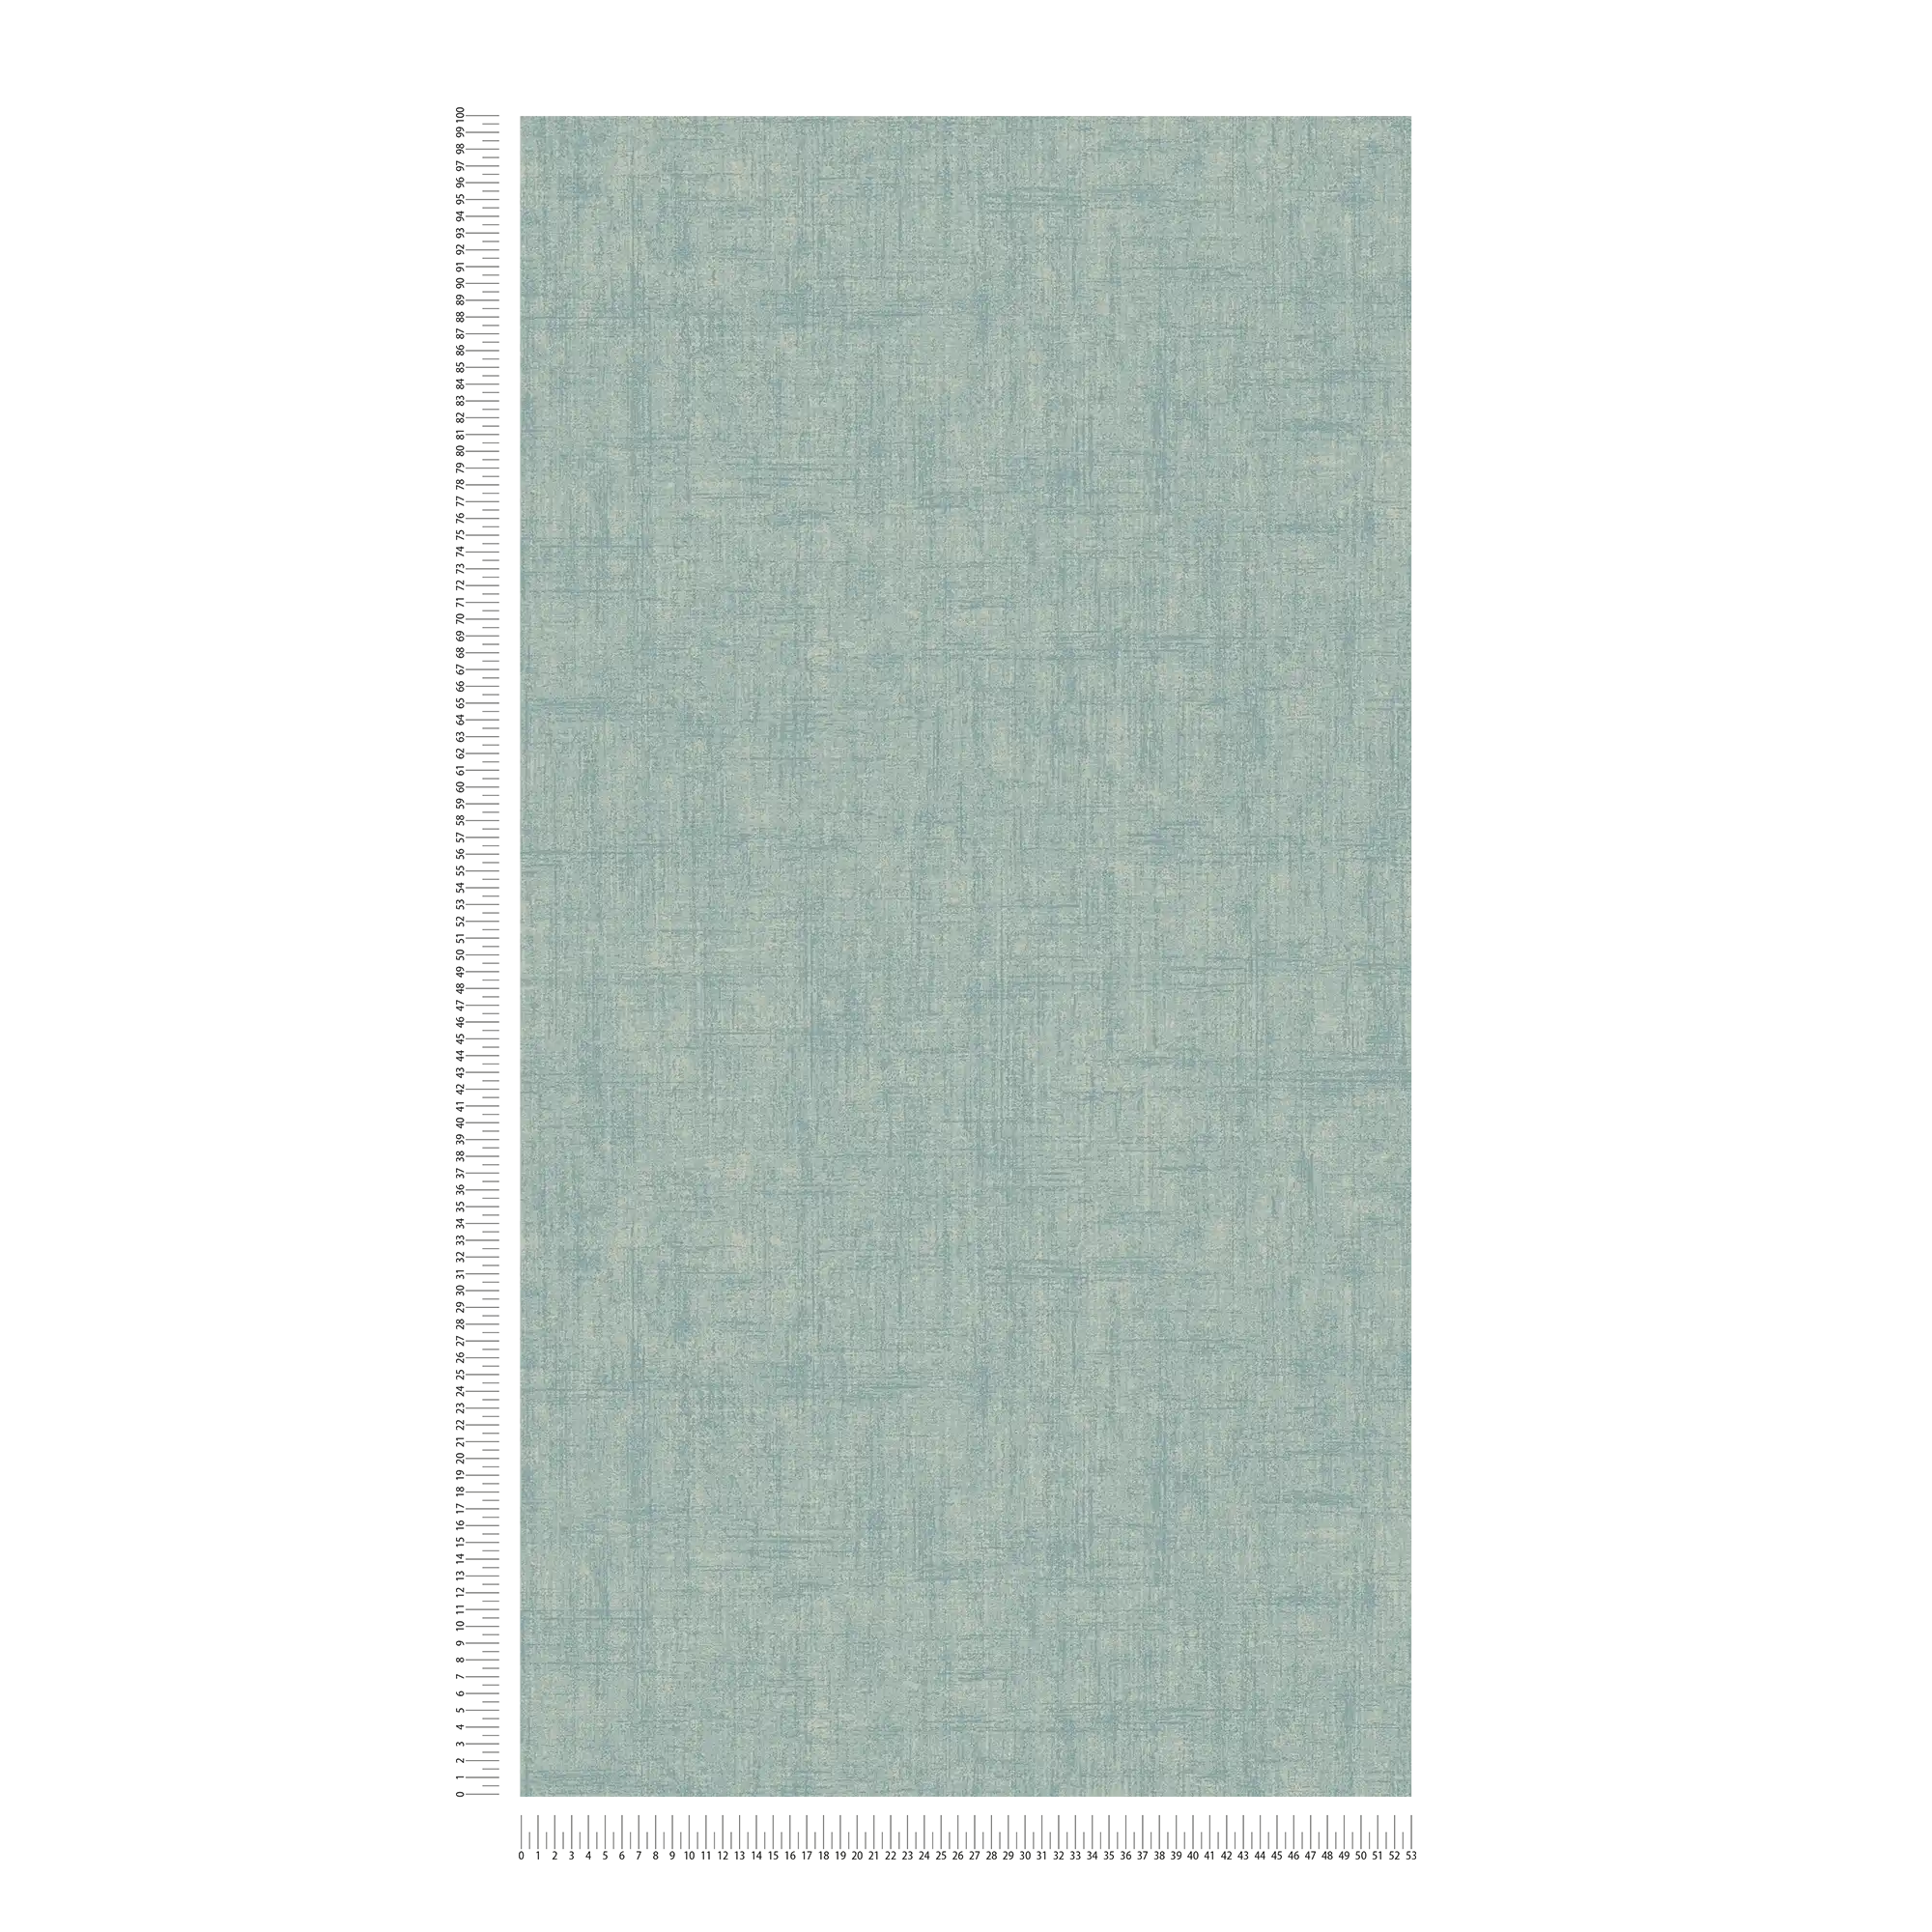             Wassergrüne Tapete, grobe Leinenoptik – Blau, Grün
        